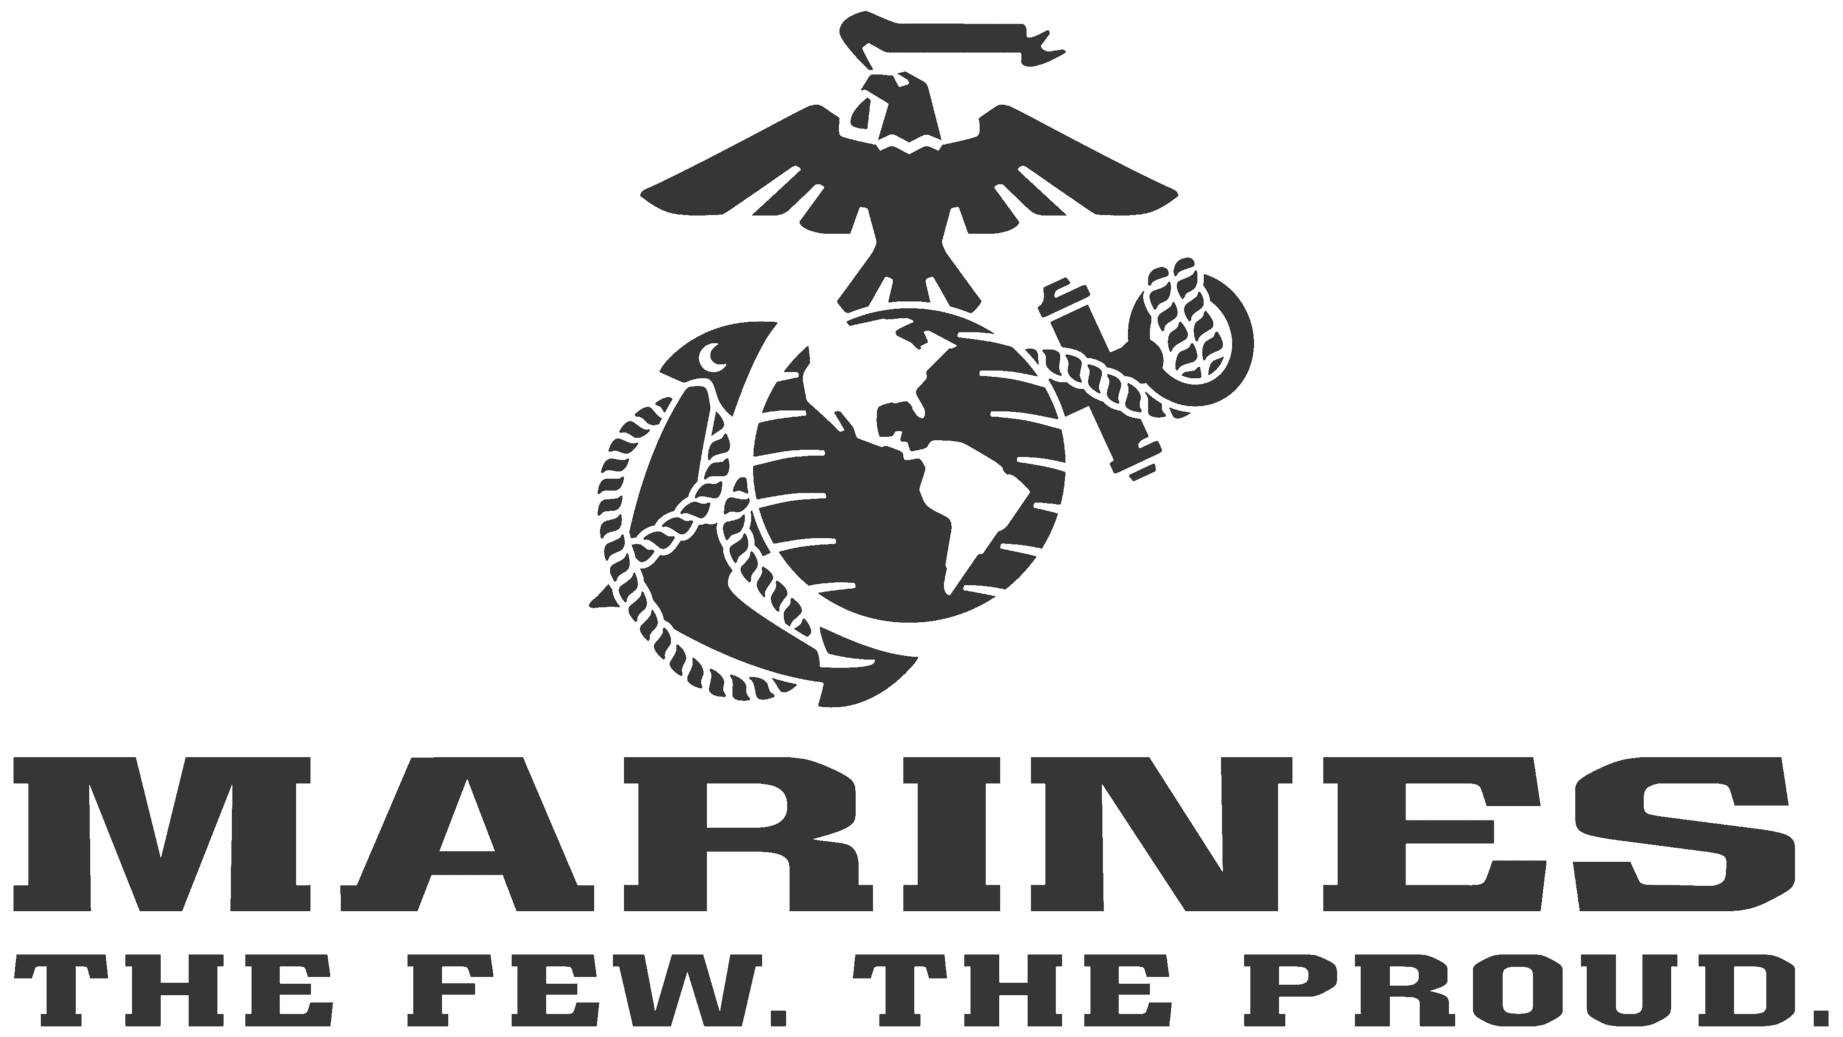 United states marine corps sign 2003 present